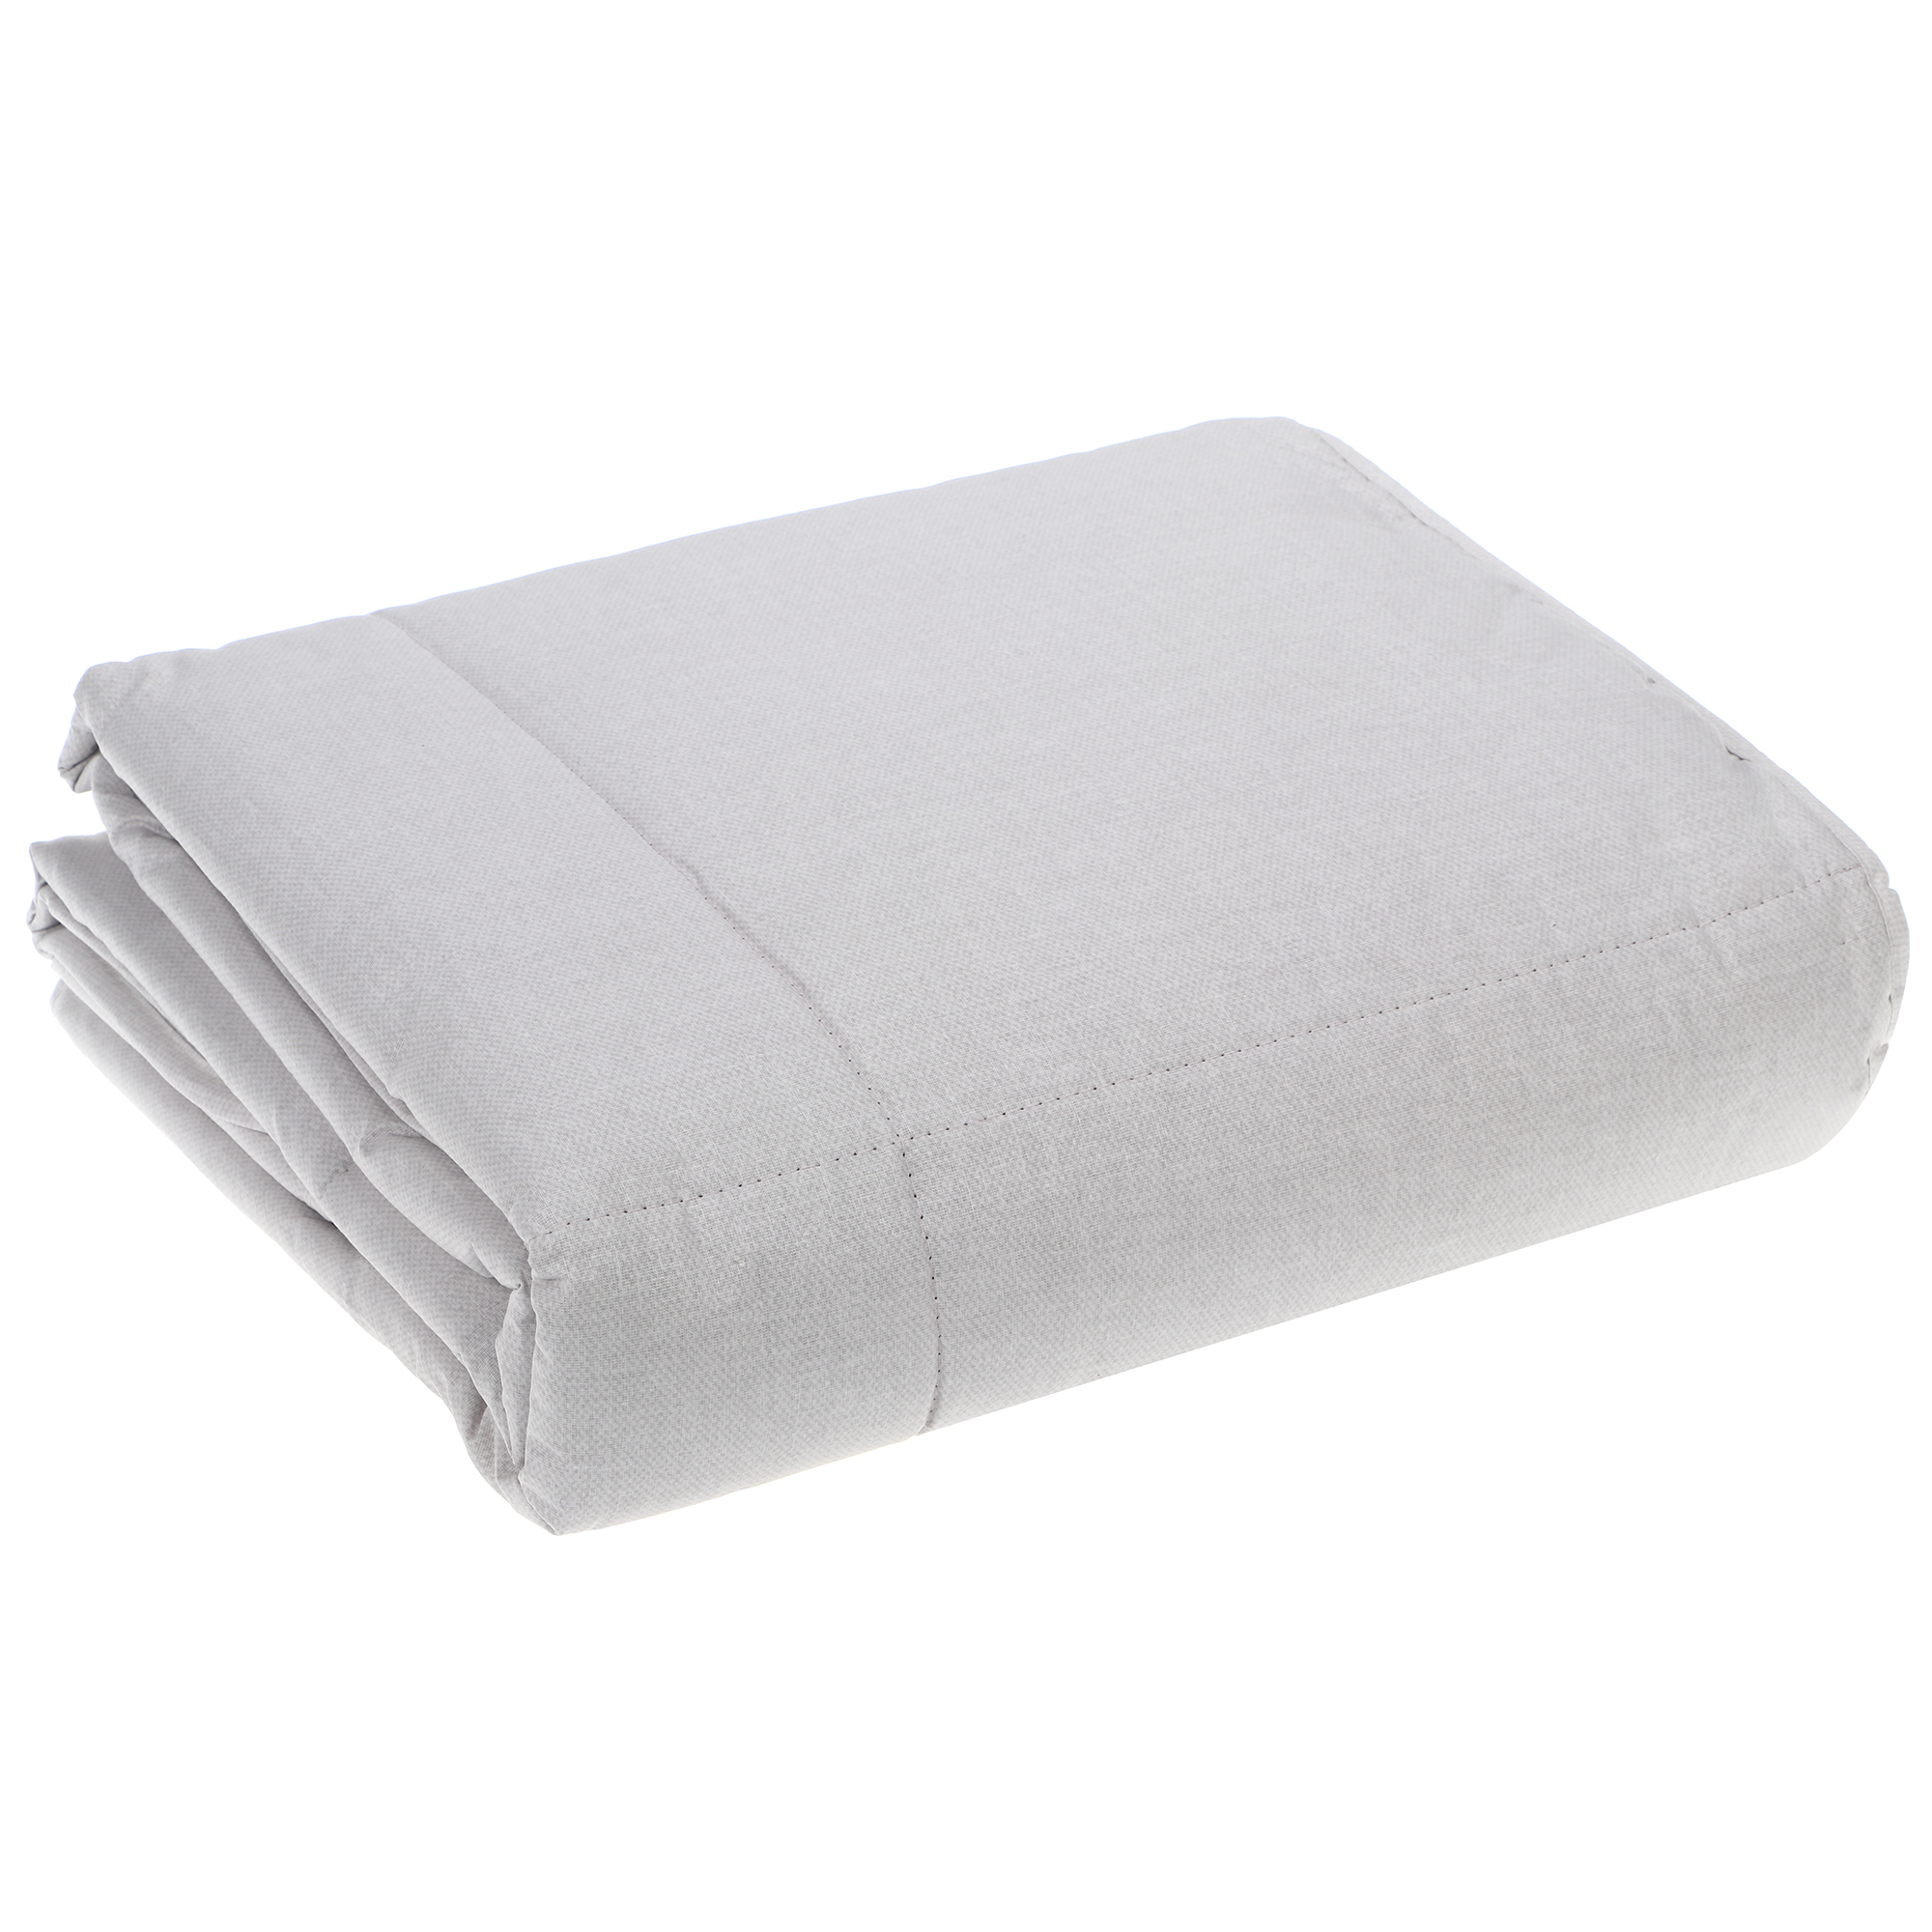 Одеяло Medsleep Sonora белое 140х200 см, цвет белый - фото 5